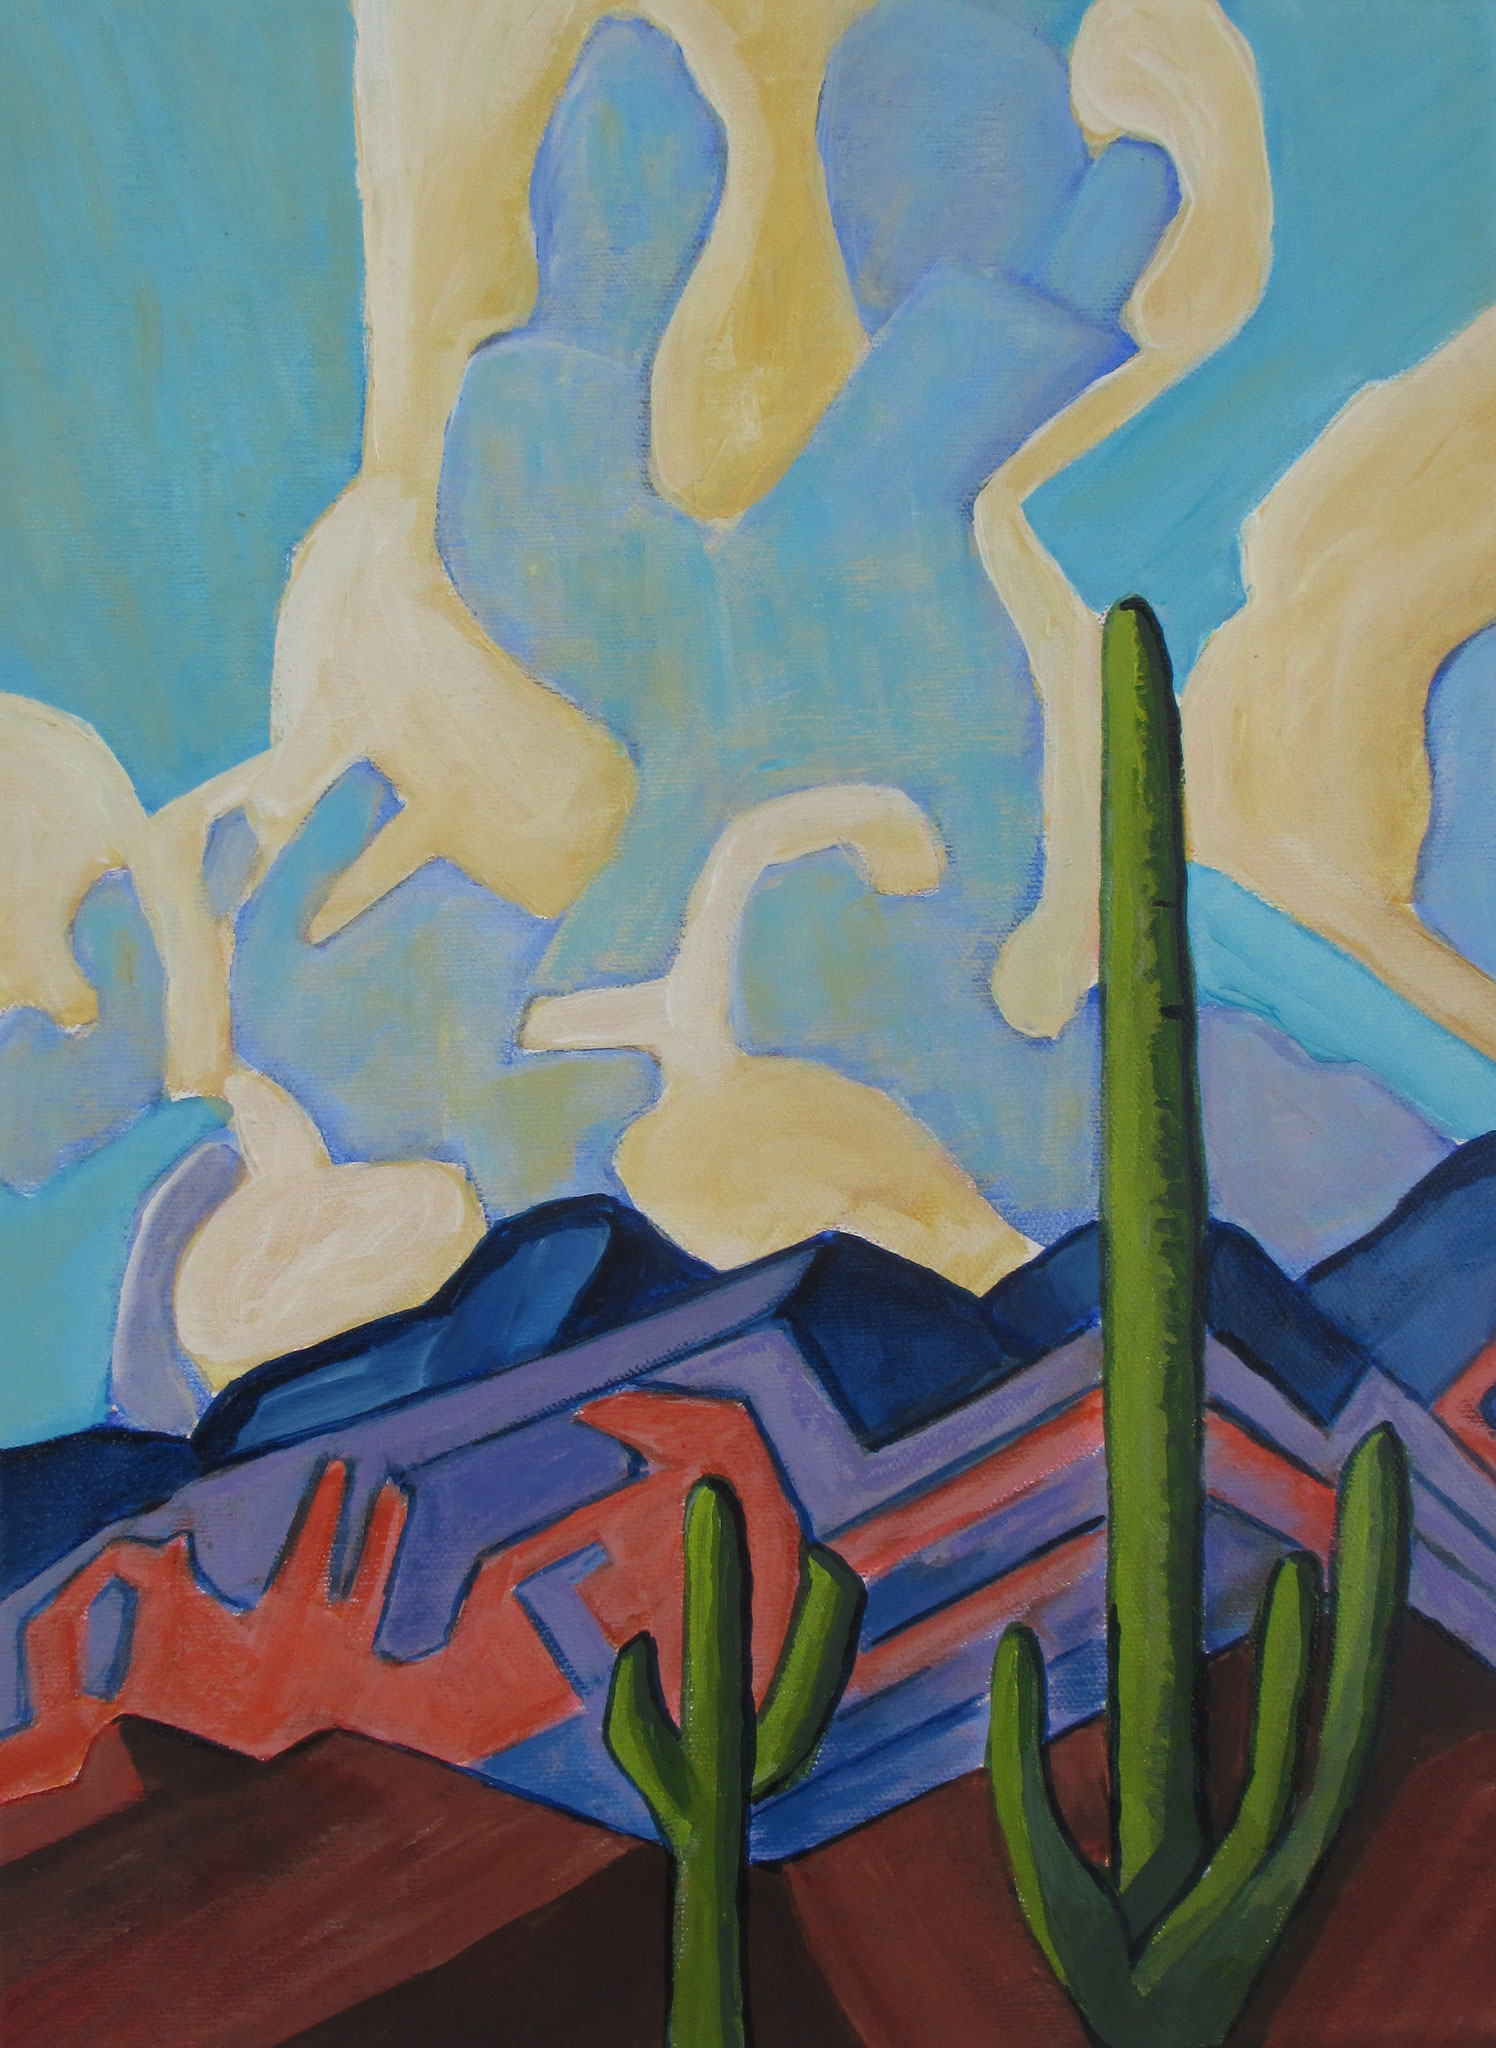 Saguaro, acrylic on canvas, 12 x 16